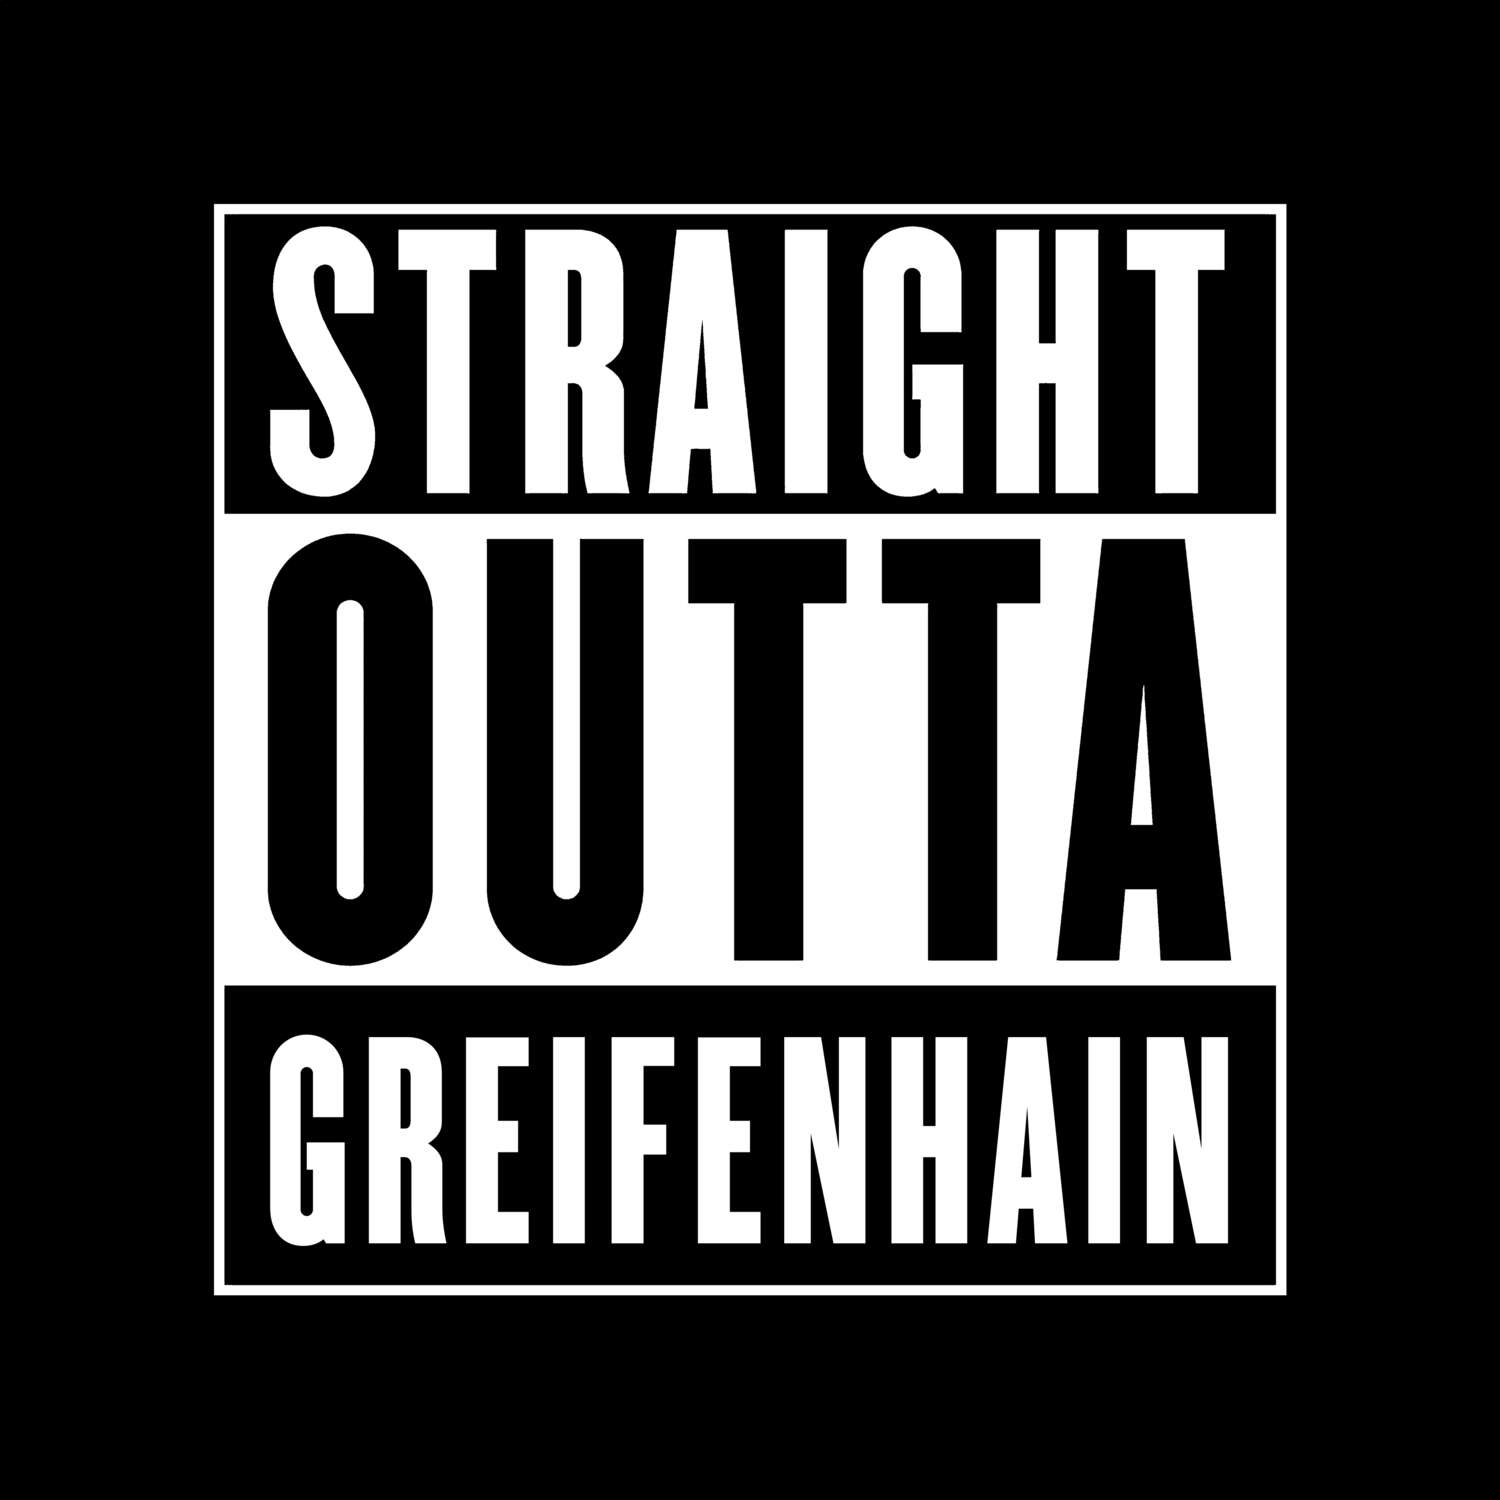 Greifenhain T-Shirt »Straight Outta«